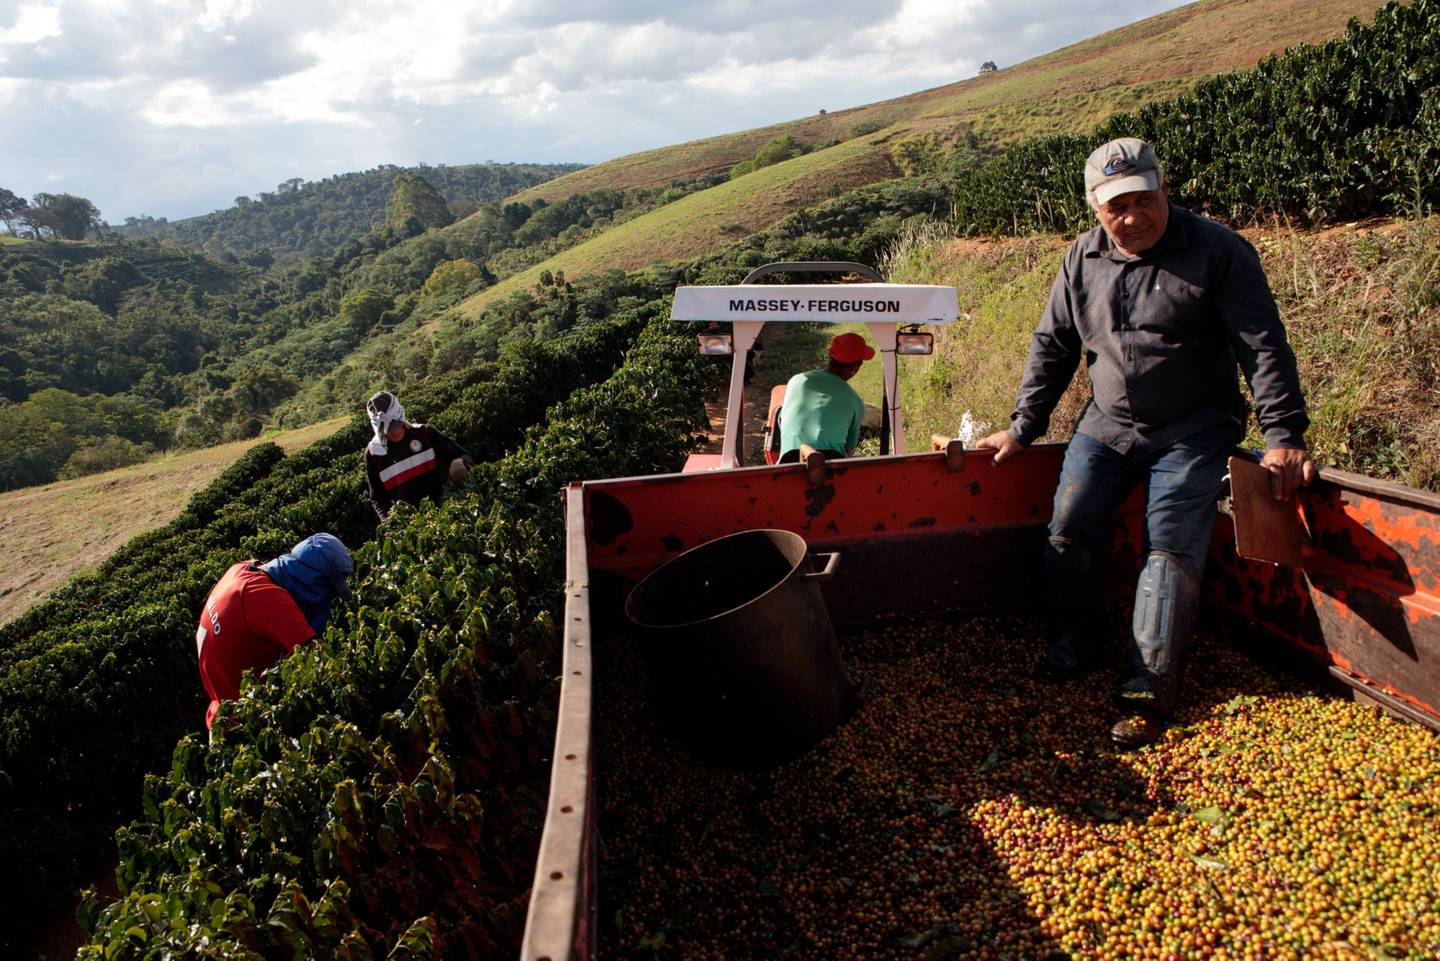 Trabajadores cosechan café en una finca de Guaxupe, estado de Minas Gerais, Brasil. Fotógrafo: Patricia Monteiro/Bloomberg